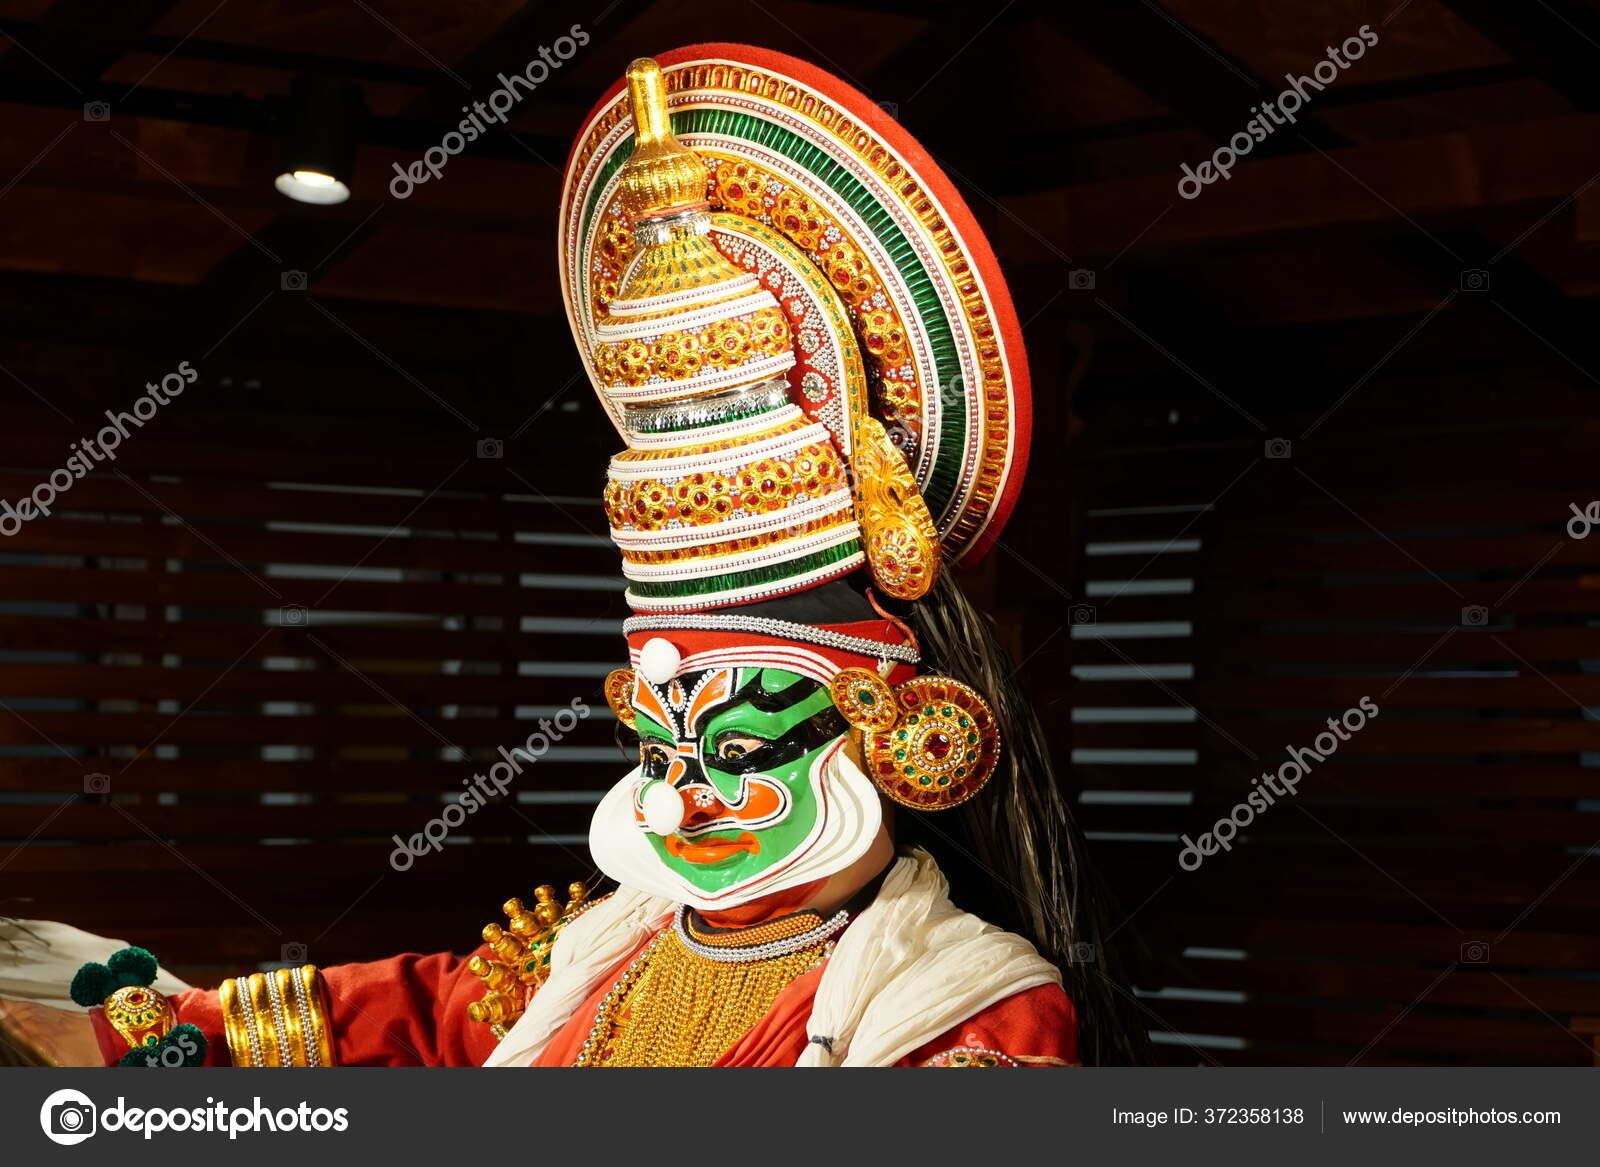 Kathakali face Stock Photos, Royalty Free Kathakali face Images |  Depositphotos